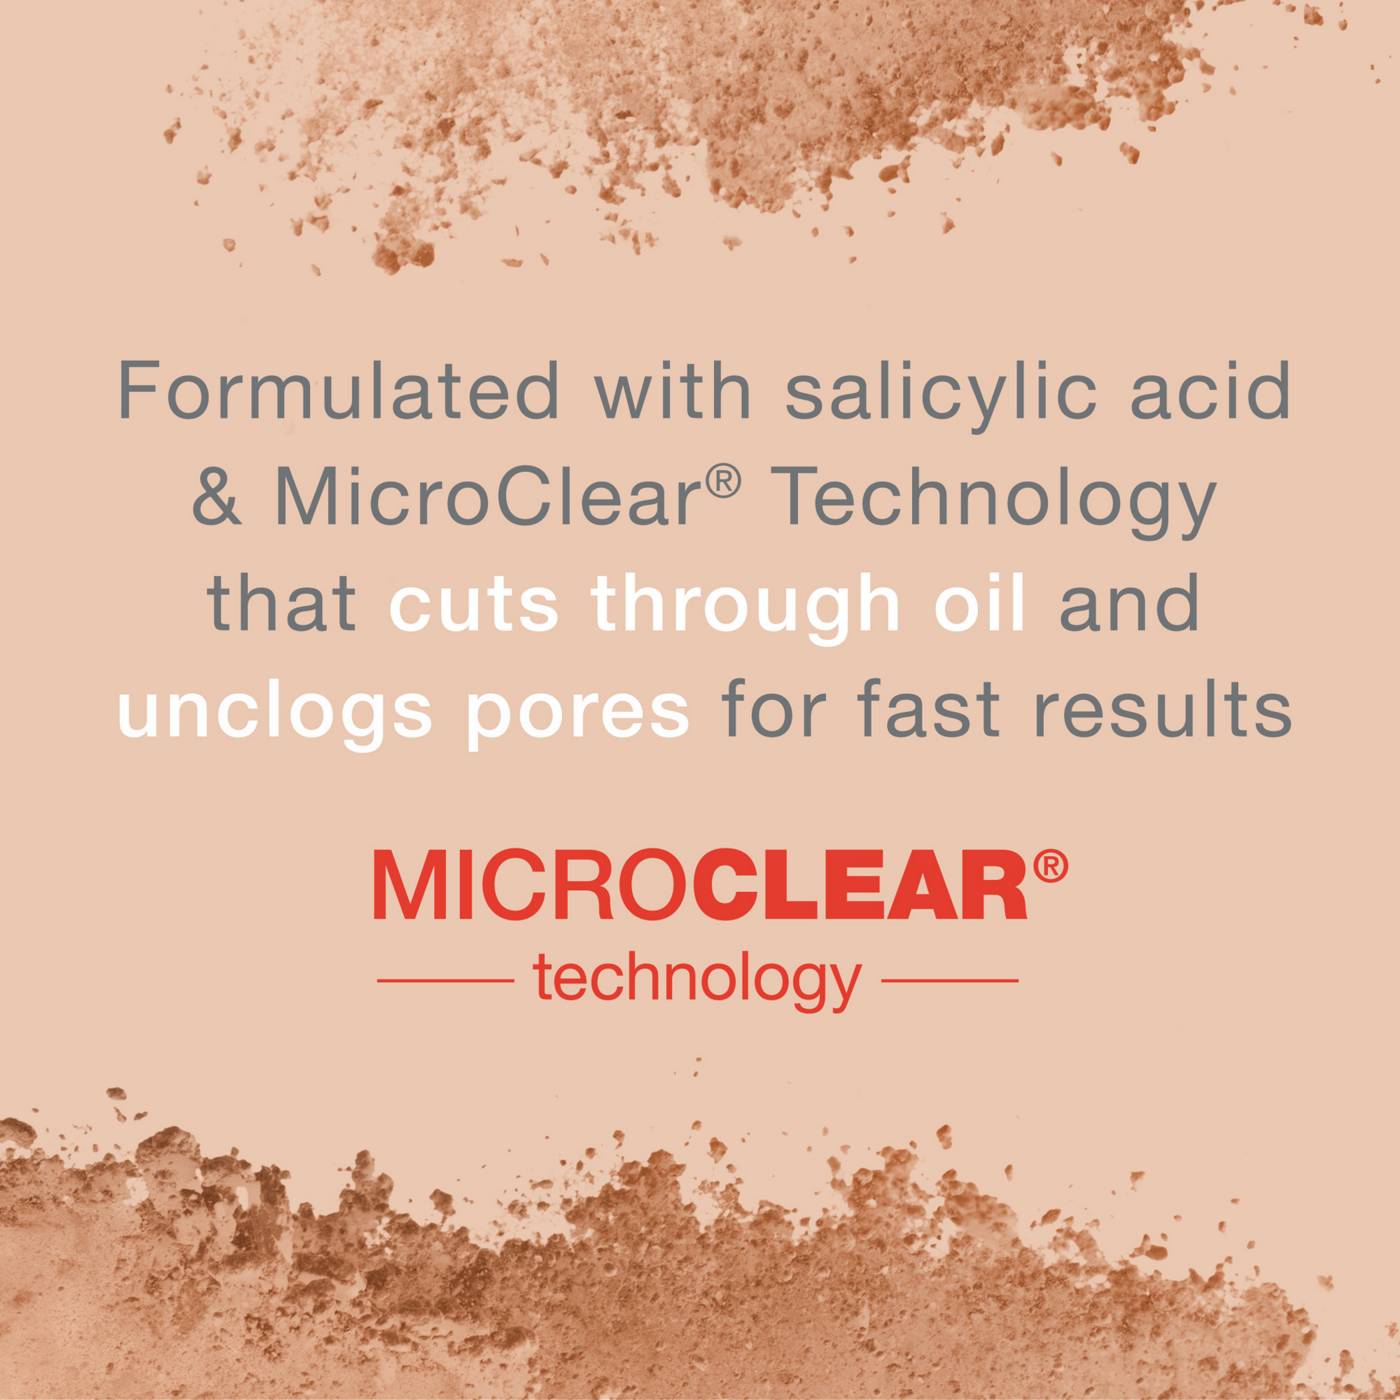 Neutrogena Skinclearing Mineral Powder - 10 Classic Ivory; image 2 of 5